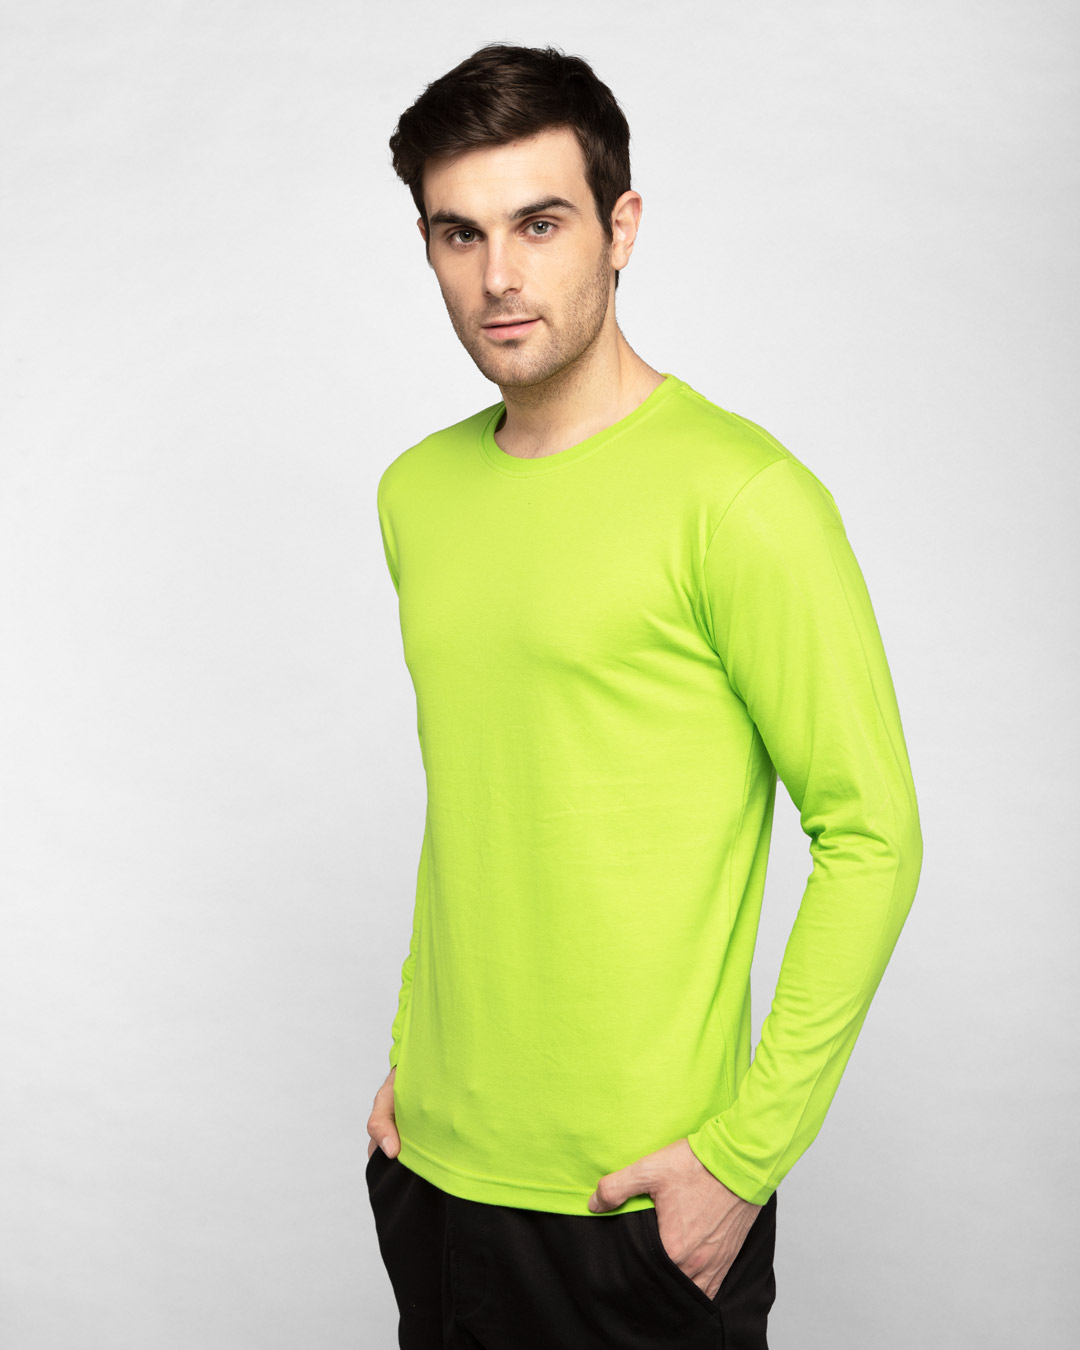 neon green t shirts